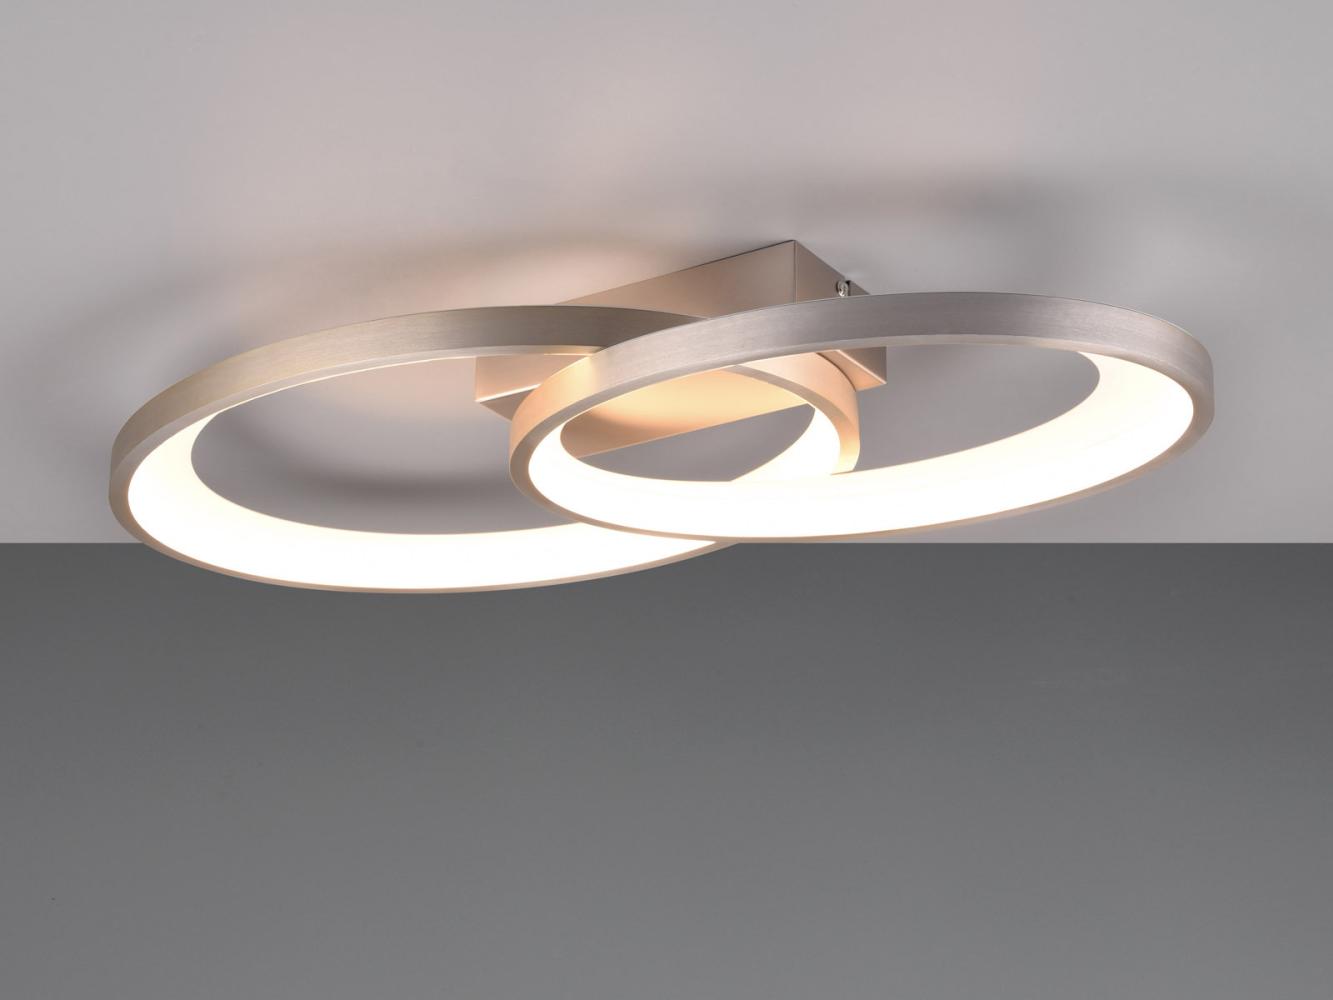 Große LED Deckenleuchte MALAGA 2 Ringe, Silber - 57cm lang Bild 1